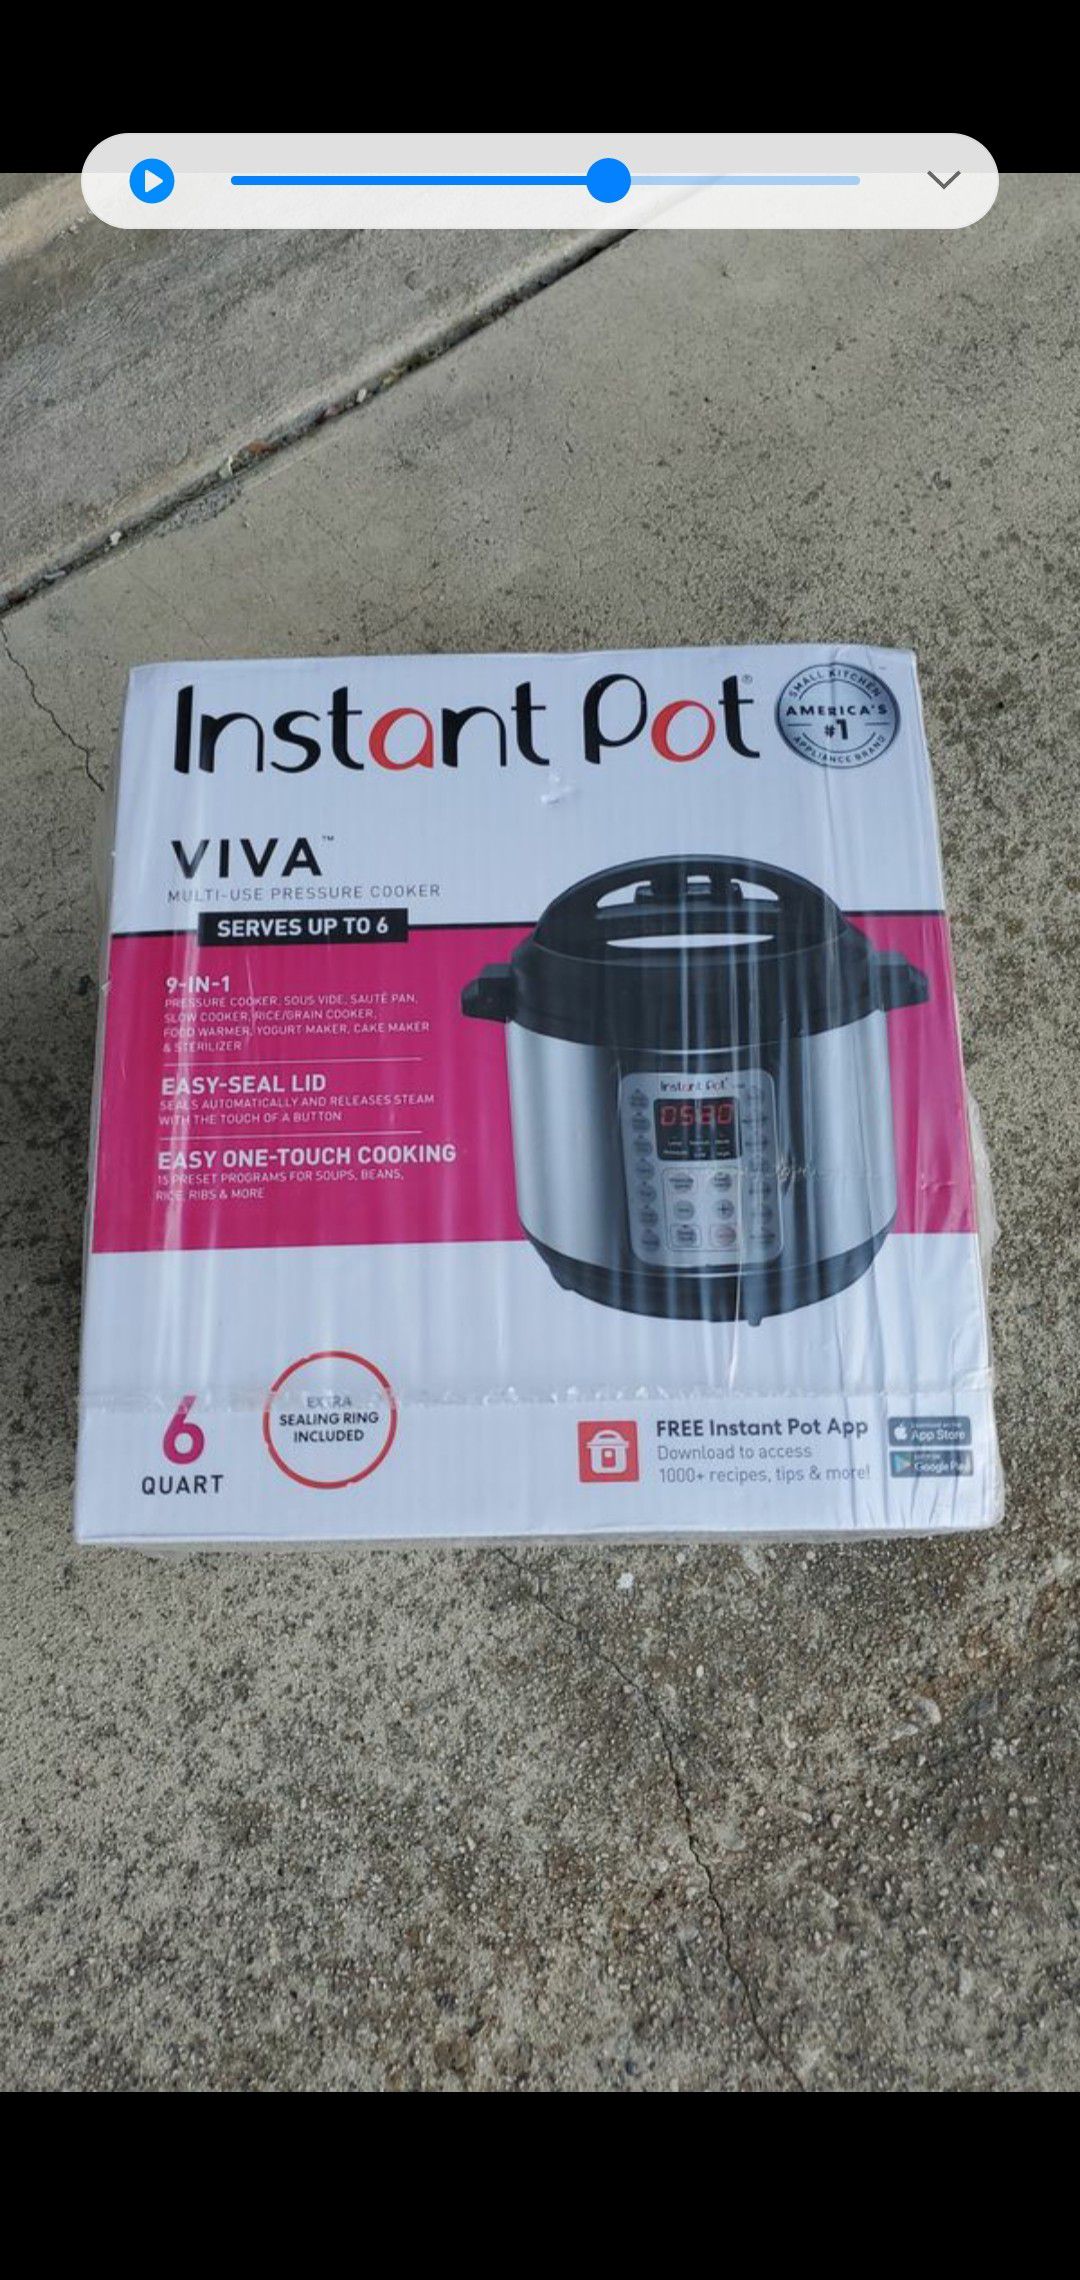 Brand new Instant Pot